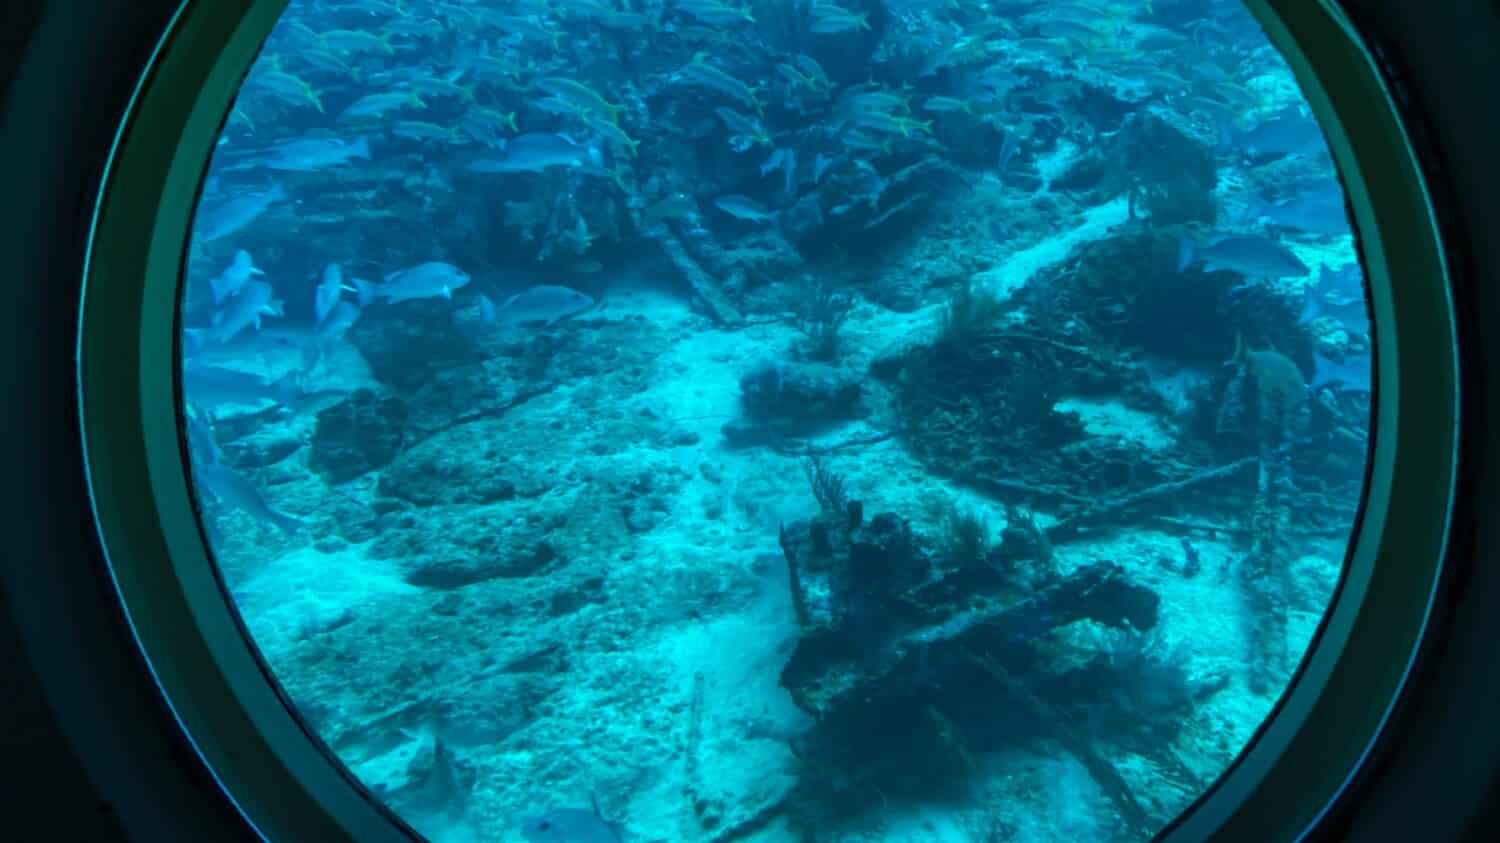 Aruba -2022: View from viewing portals on Atlantis VI Submarine. Canadian passenger submarine company. Interior of the tourist submarine Atlantis whilst submerged. Sunken ship makes coral reef.